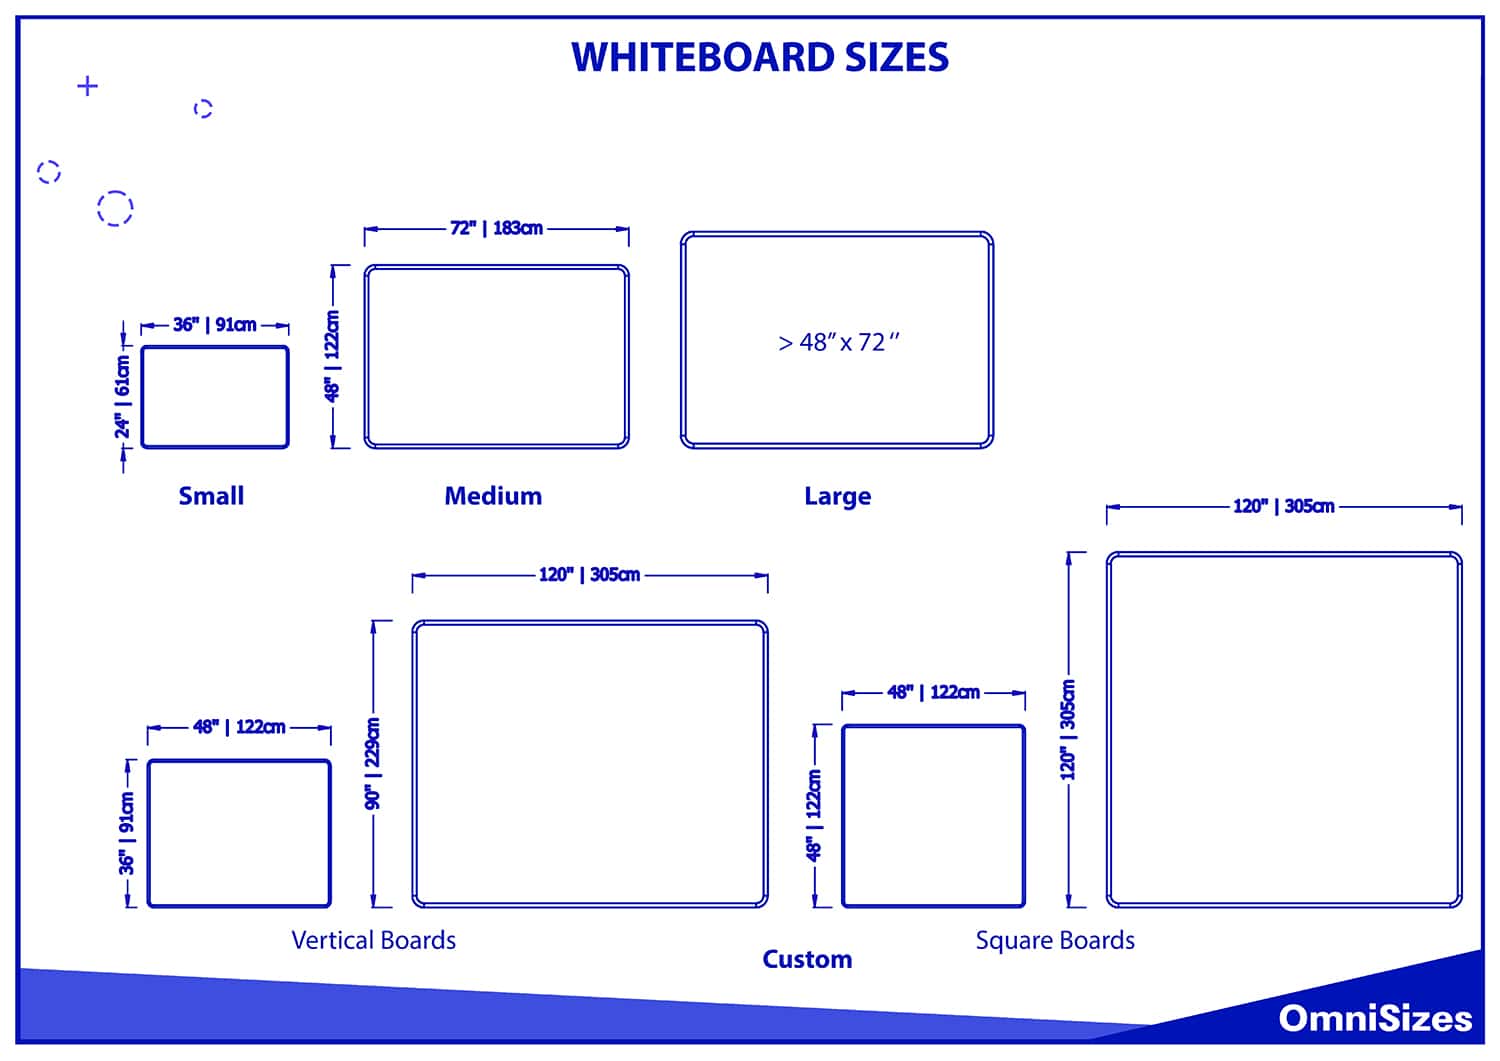 Whiteboard sizes